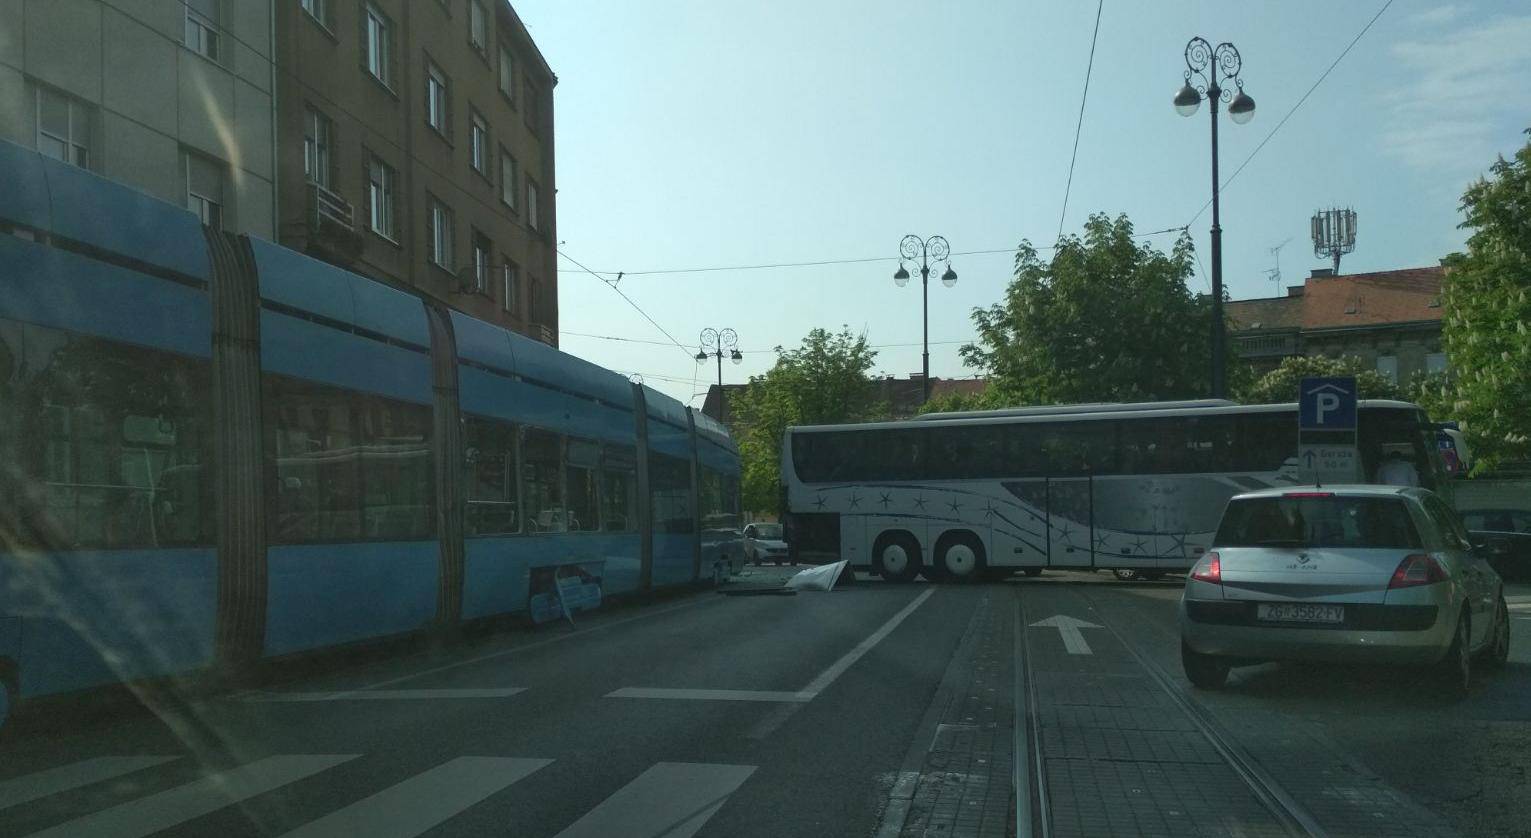 Na Langovom trgu u Zagrebu sudarili se autobus i tramvaj